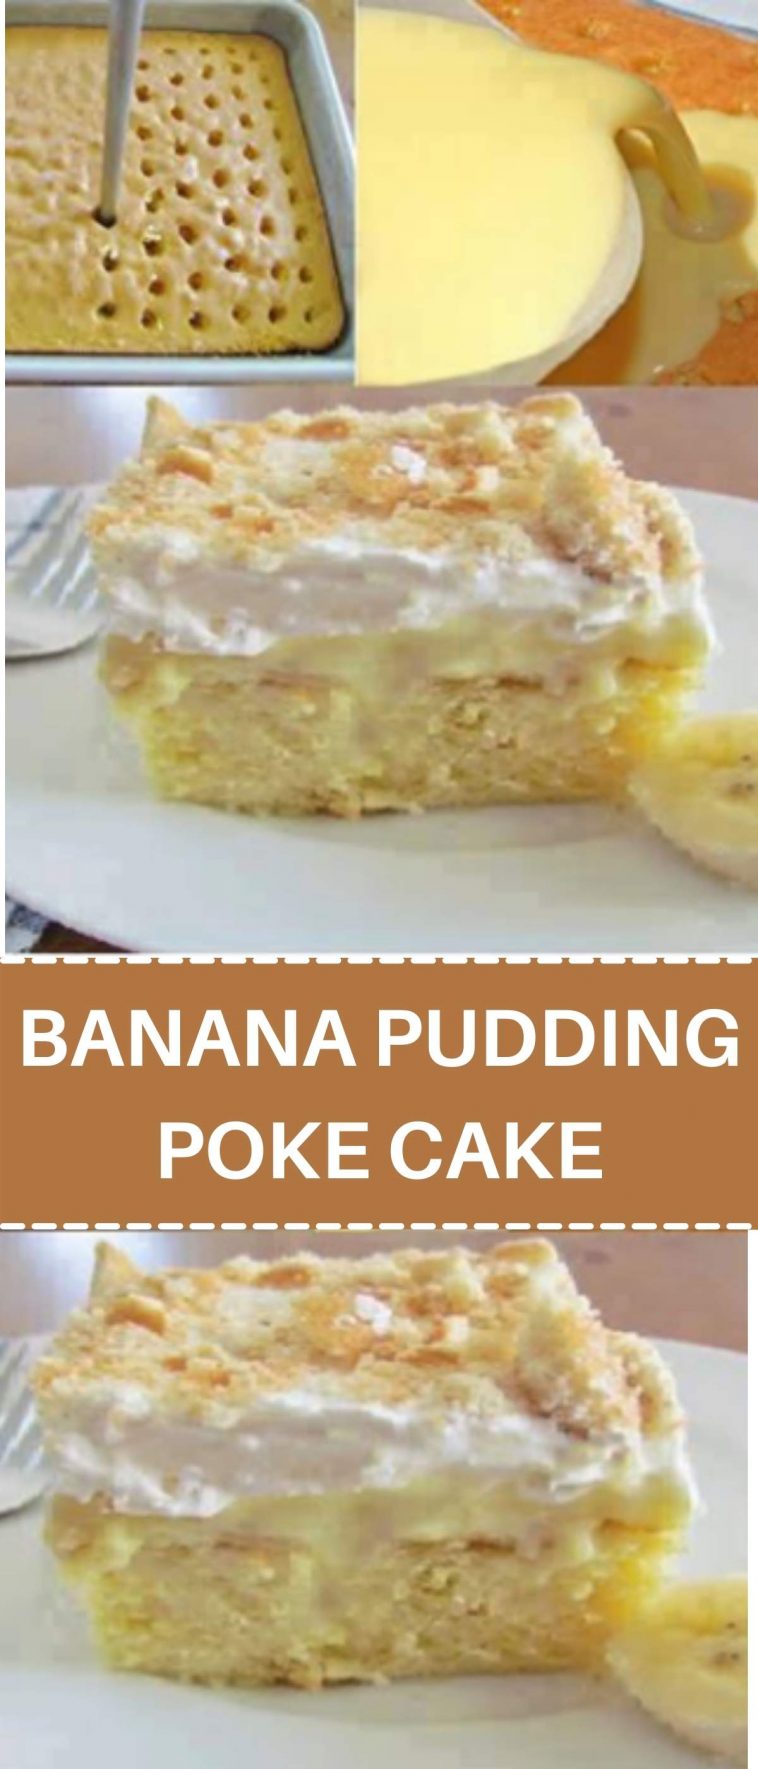 BANANA PUDDING POKE CAKE